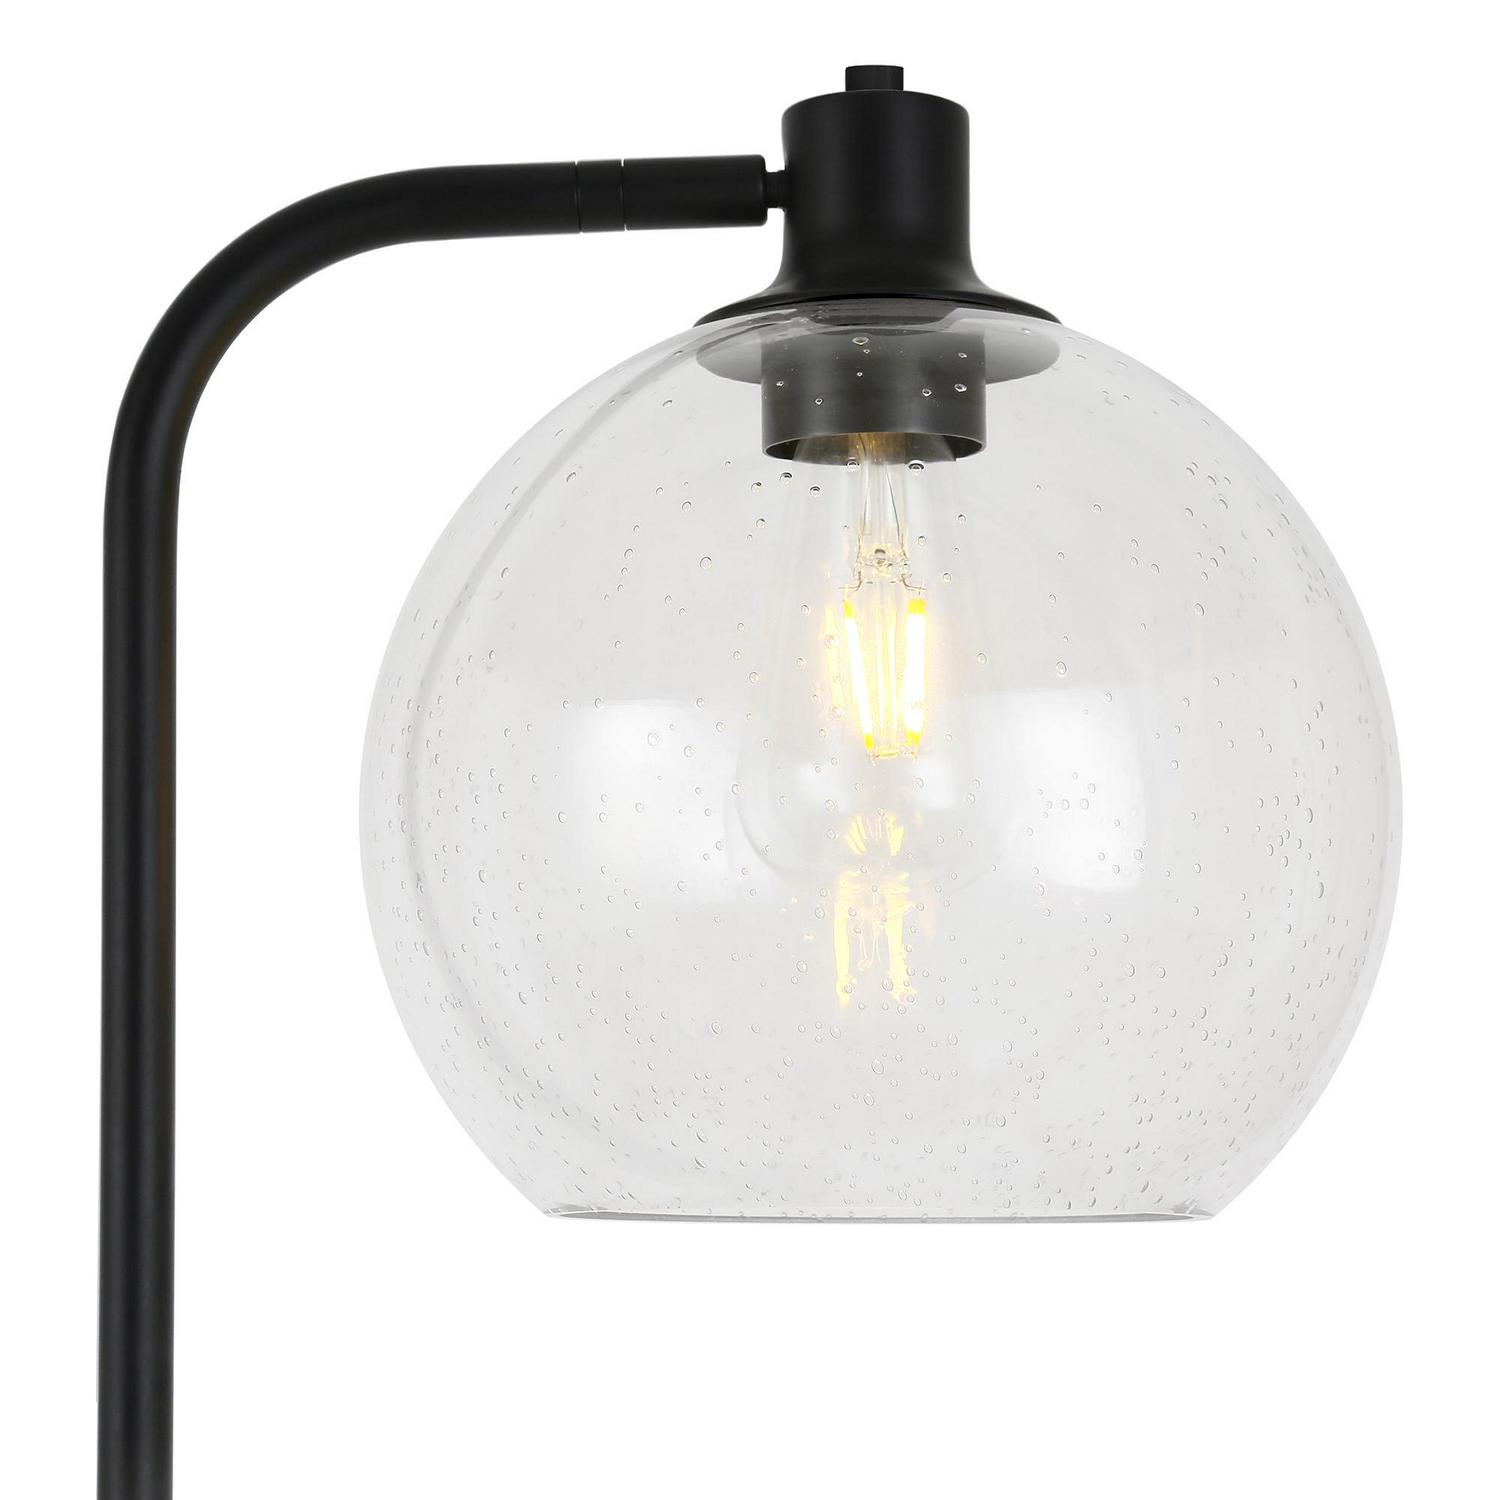 EvelynandZoe Industrial Metal Height-Adjustable Floor Lamp